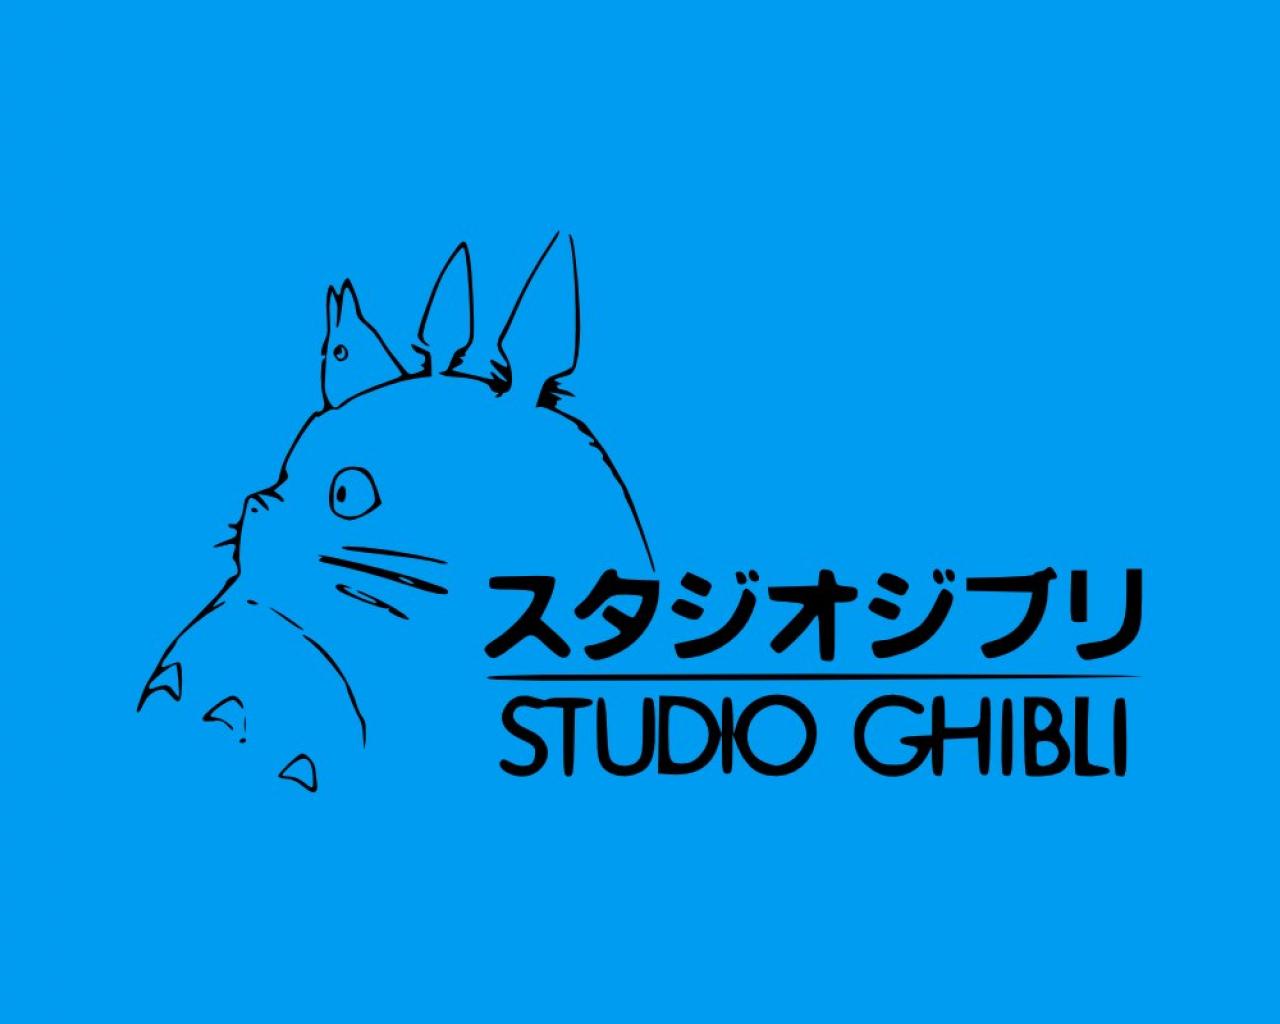 Totoro Studio Ghibli HD Wallpaper Hq Desktop